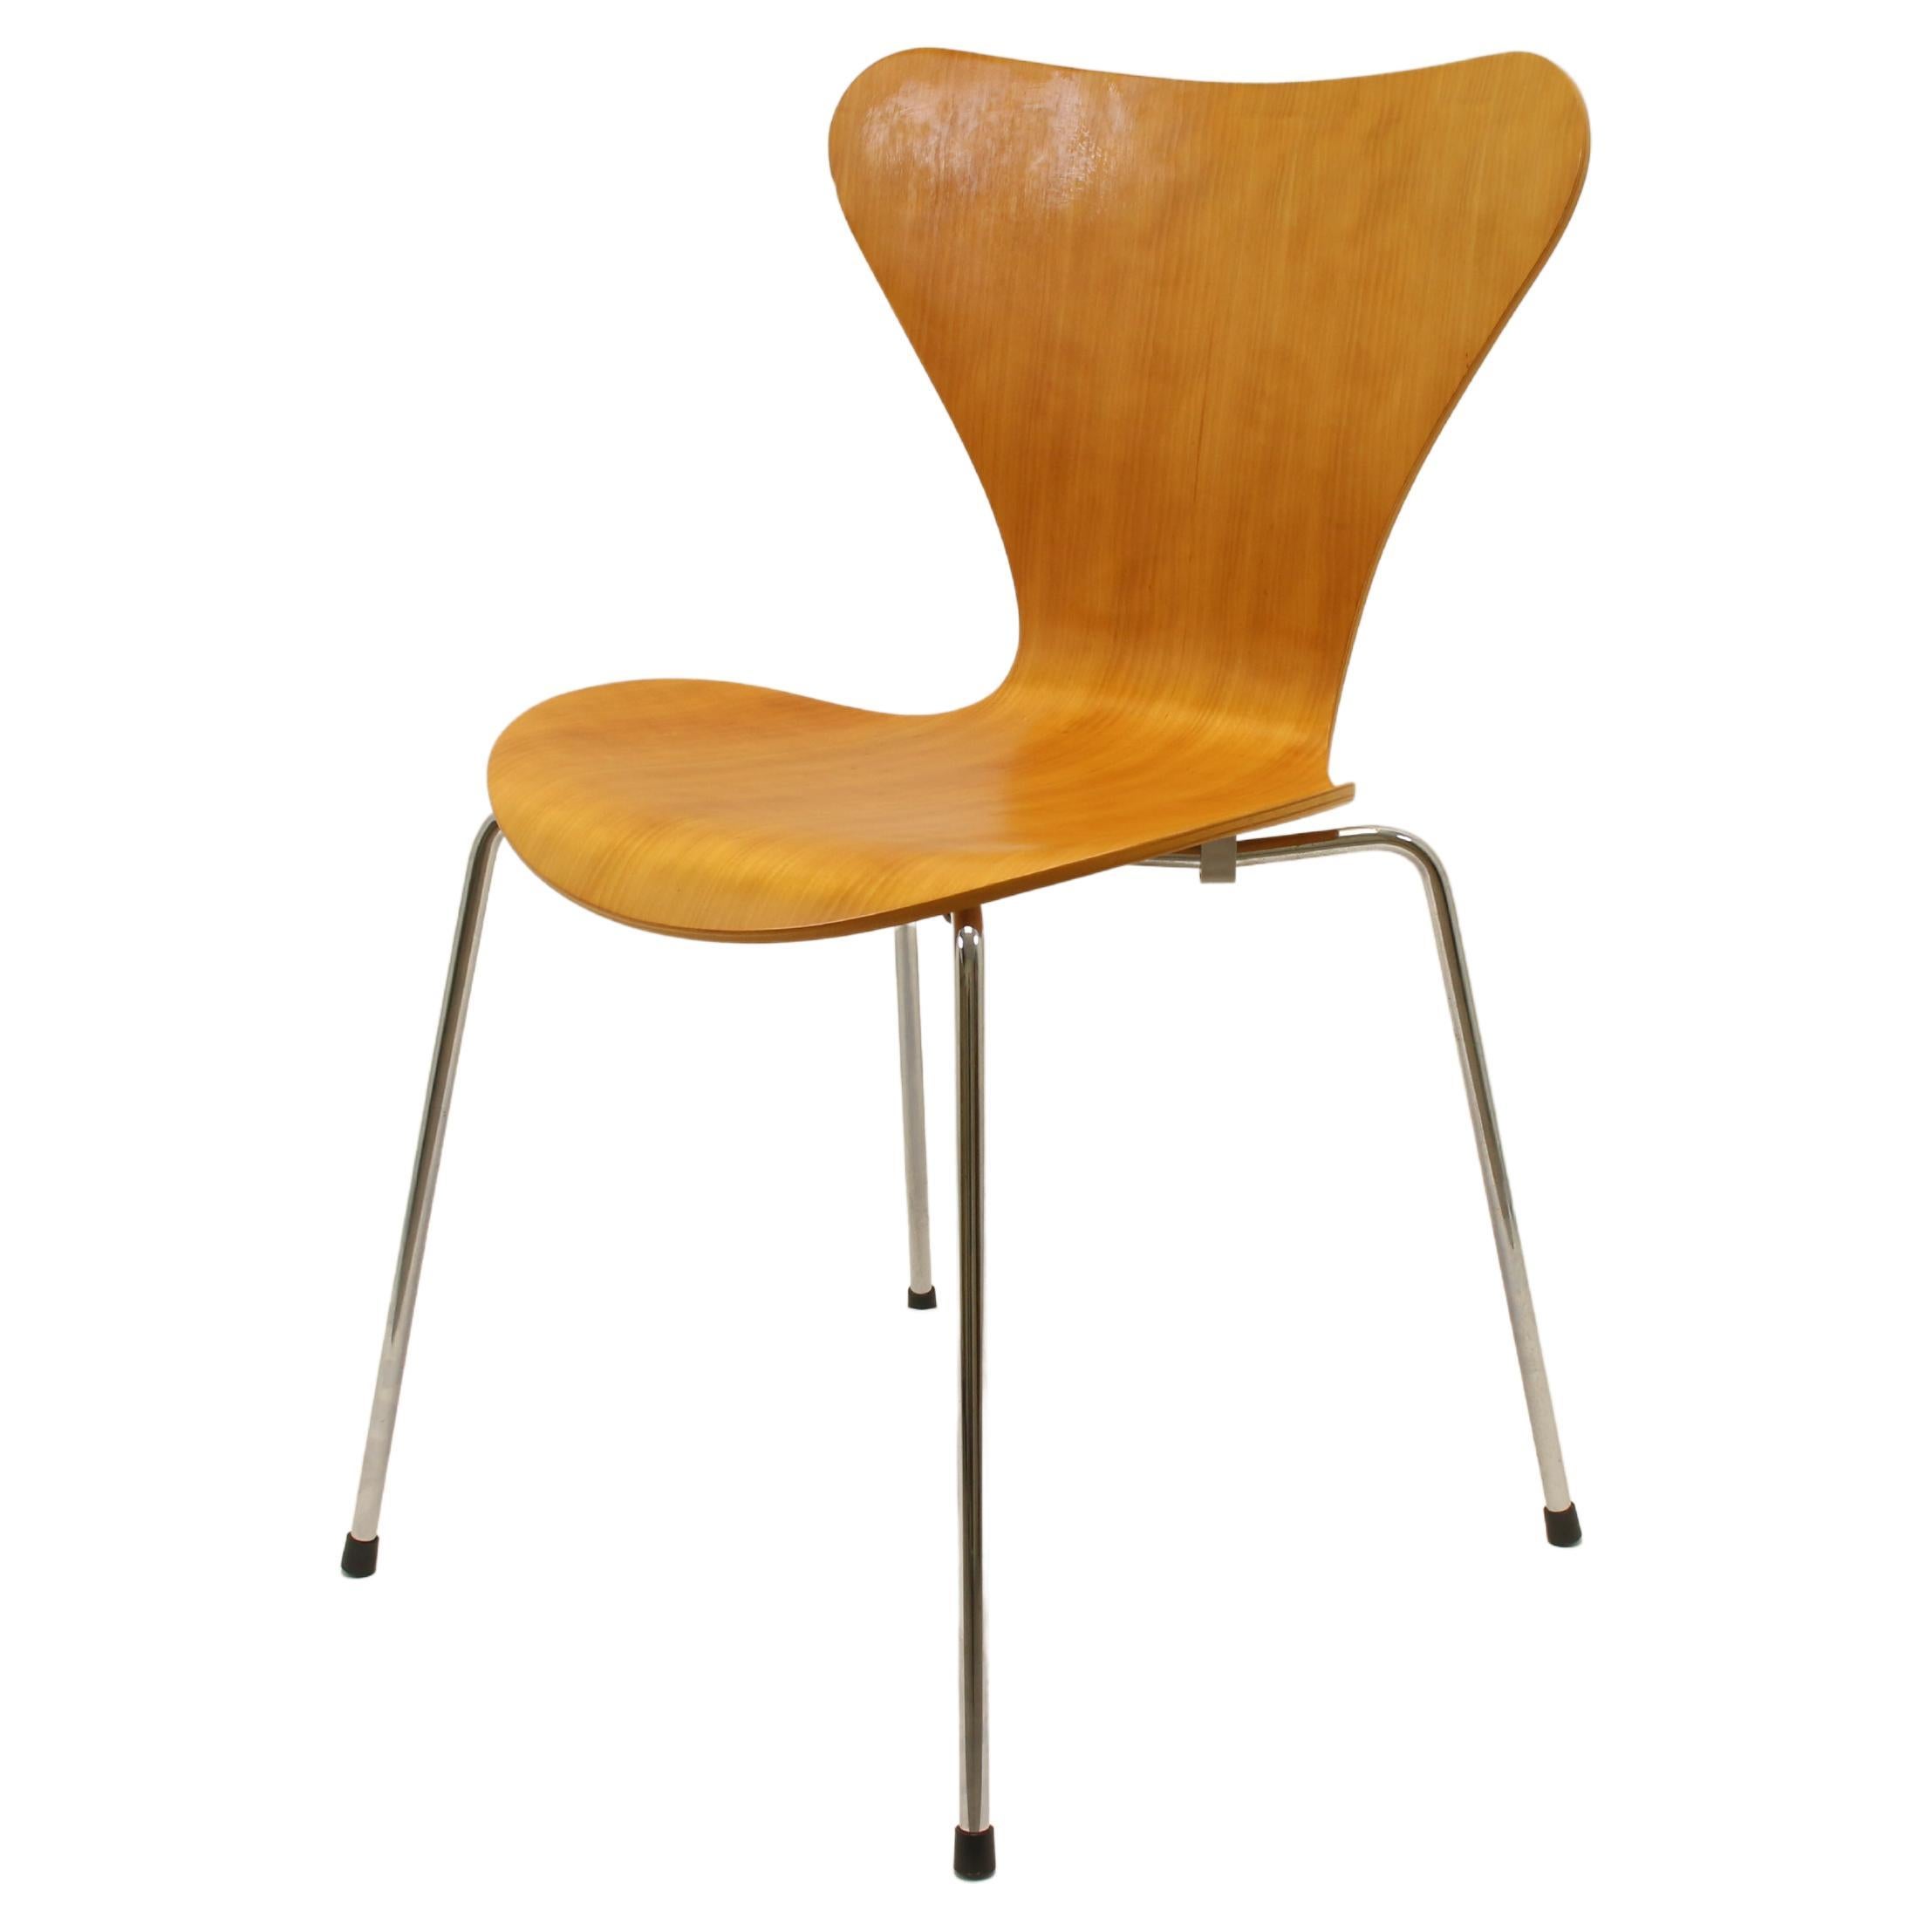 Chaise « Butterfly » d'Arne Jacobsen, modèle 3107